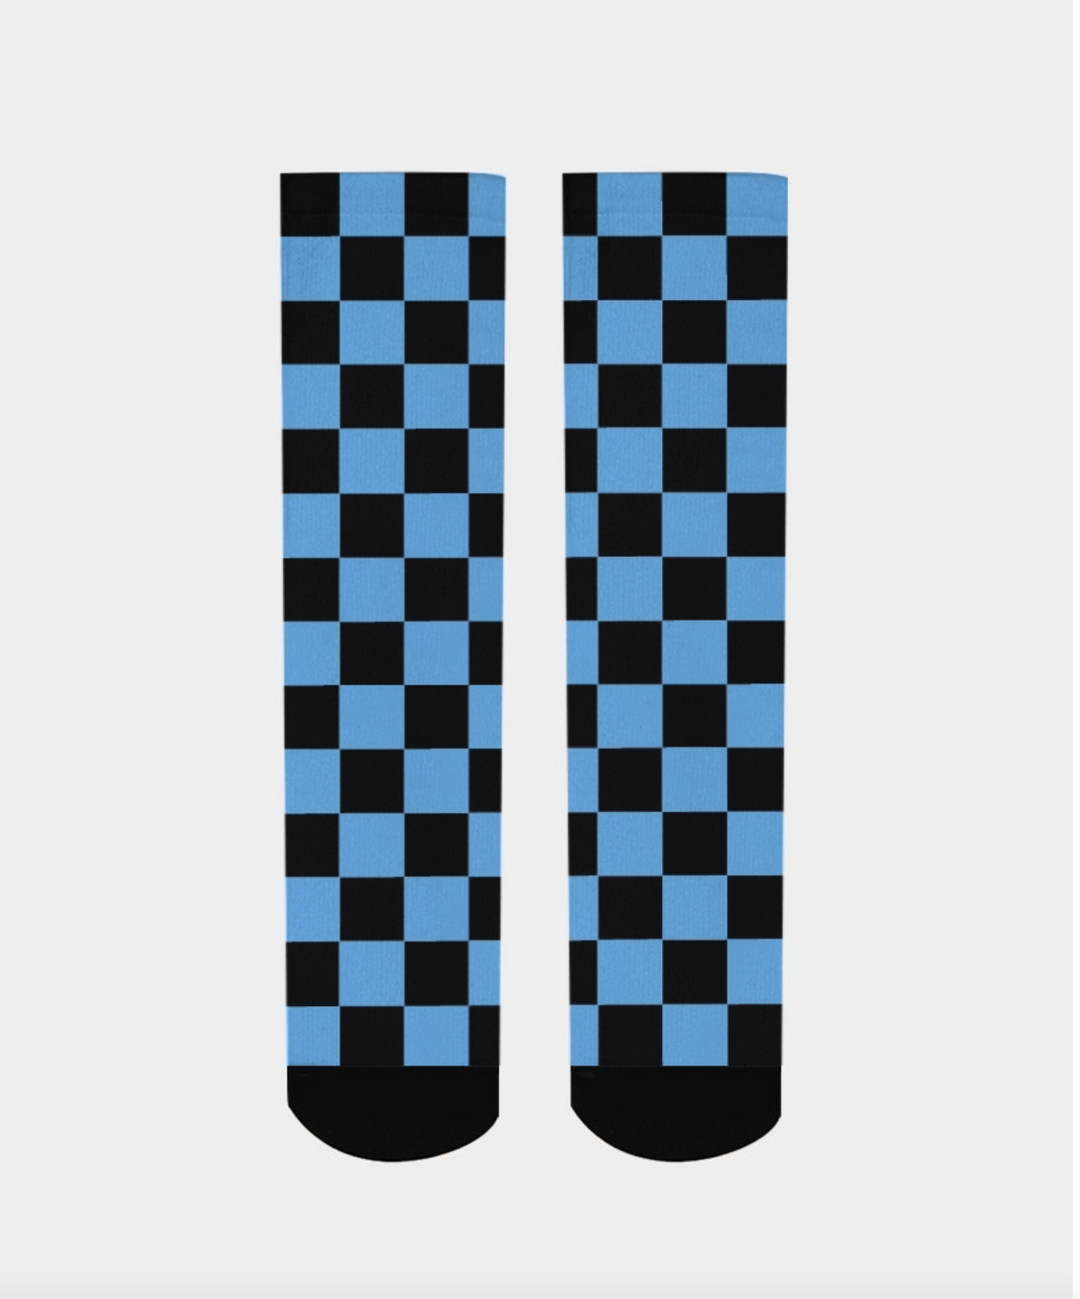 Front Trill and Lux Black blue UNC socks match jordan 1 university blue checker sock graphic